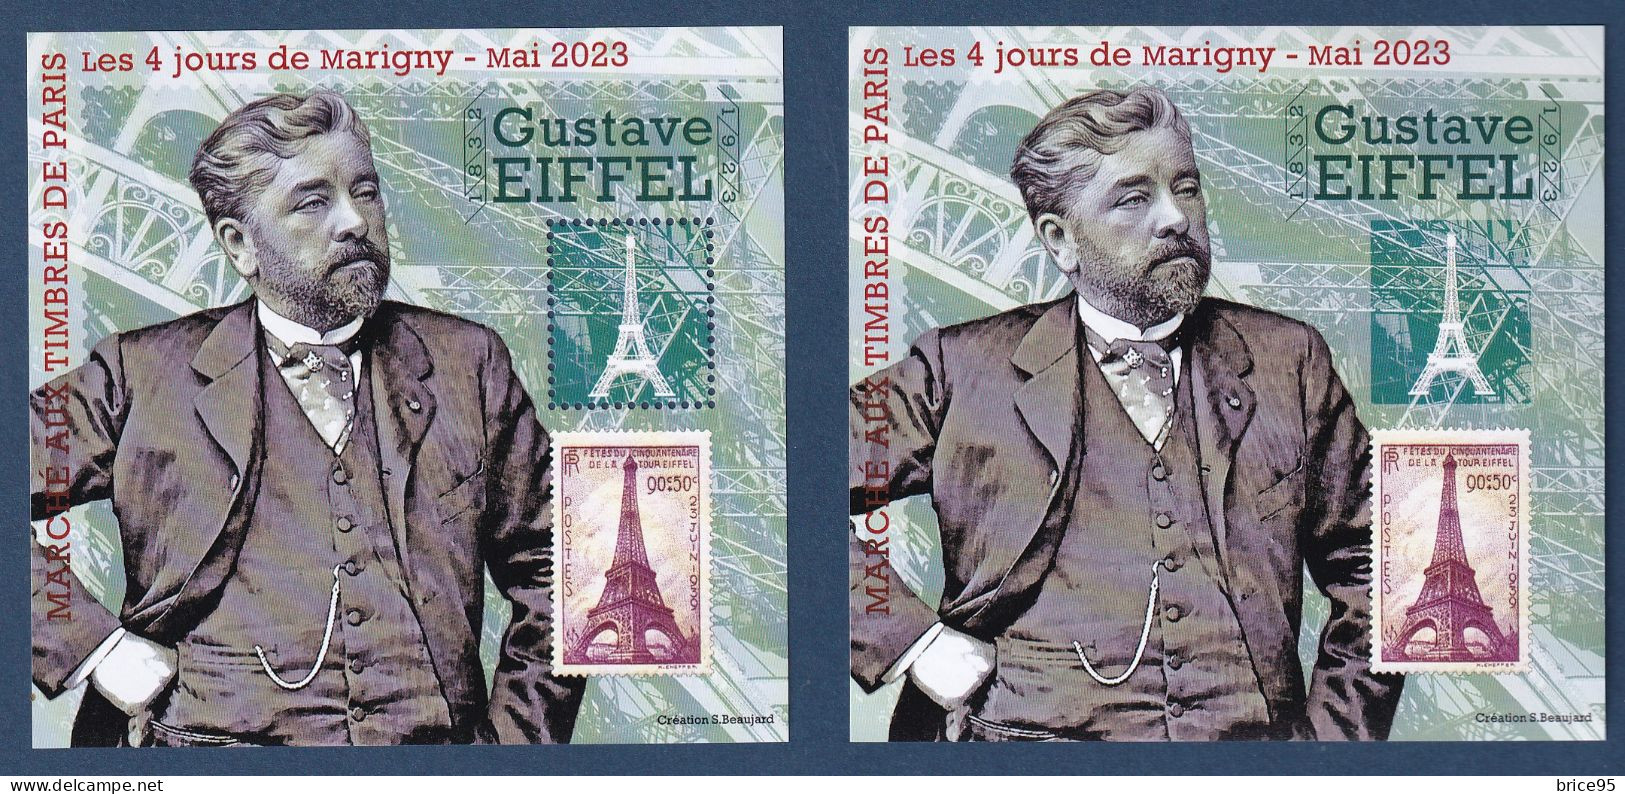 France - Bloc Marigny - Gustave Eiffel - 2023 - Souvenir Blocks